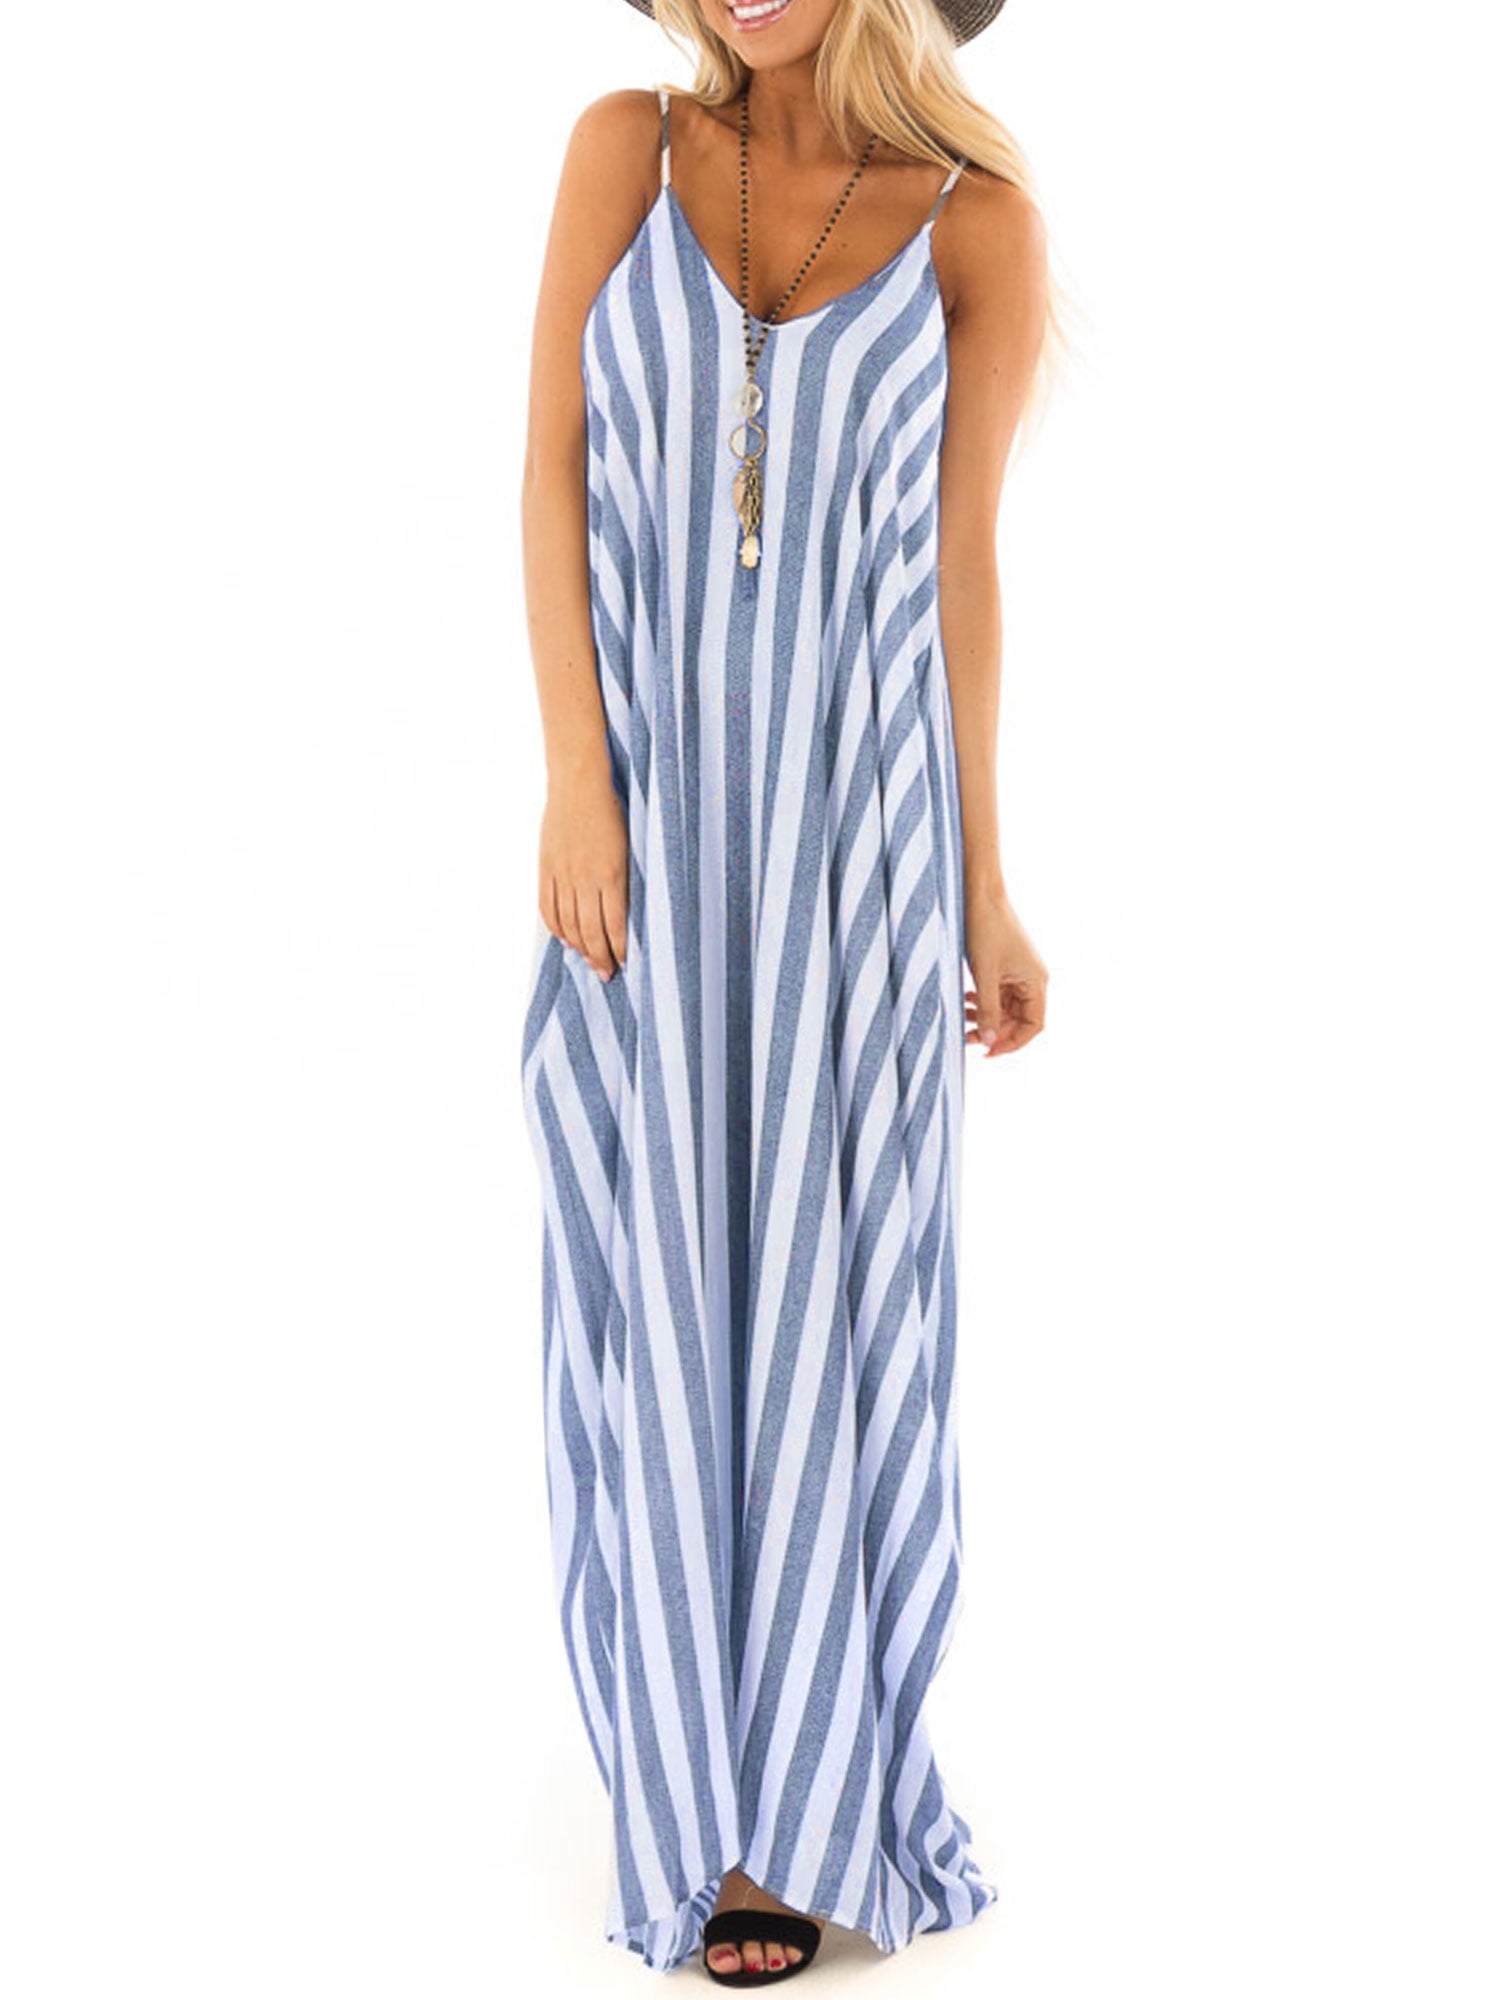 Sagton Women Basic Soft Stretchy Striped Mini Tank Dress Beach Sundresses 